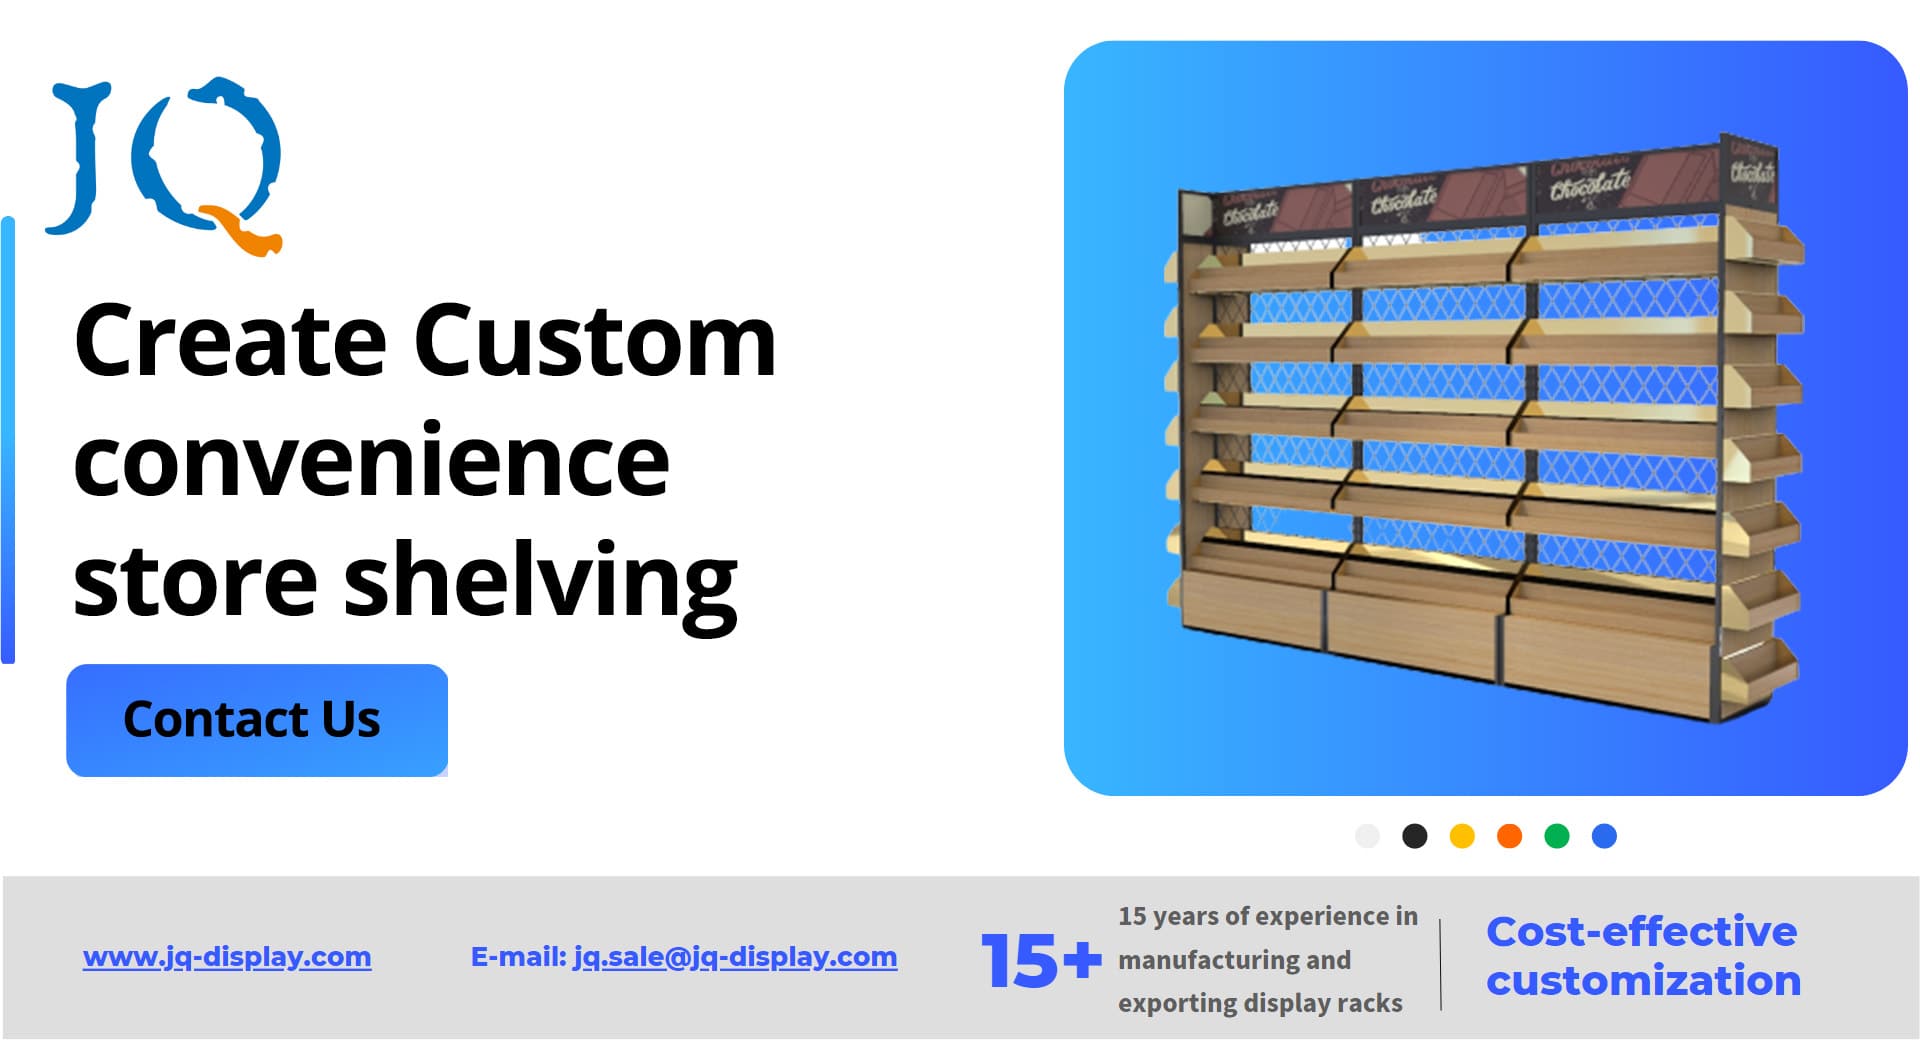 Create Custom convenience store shelving